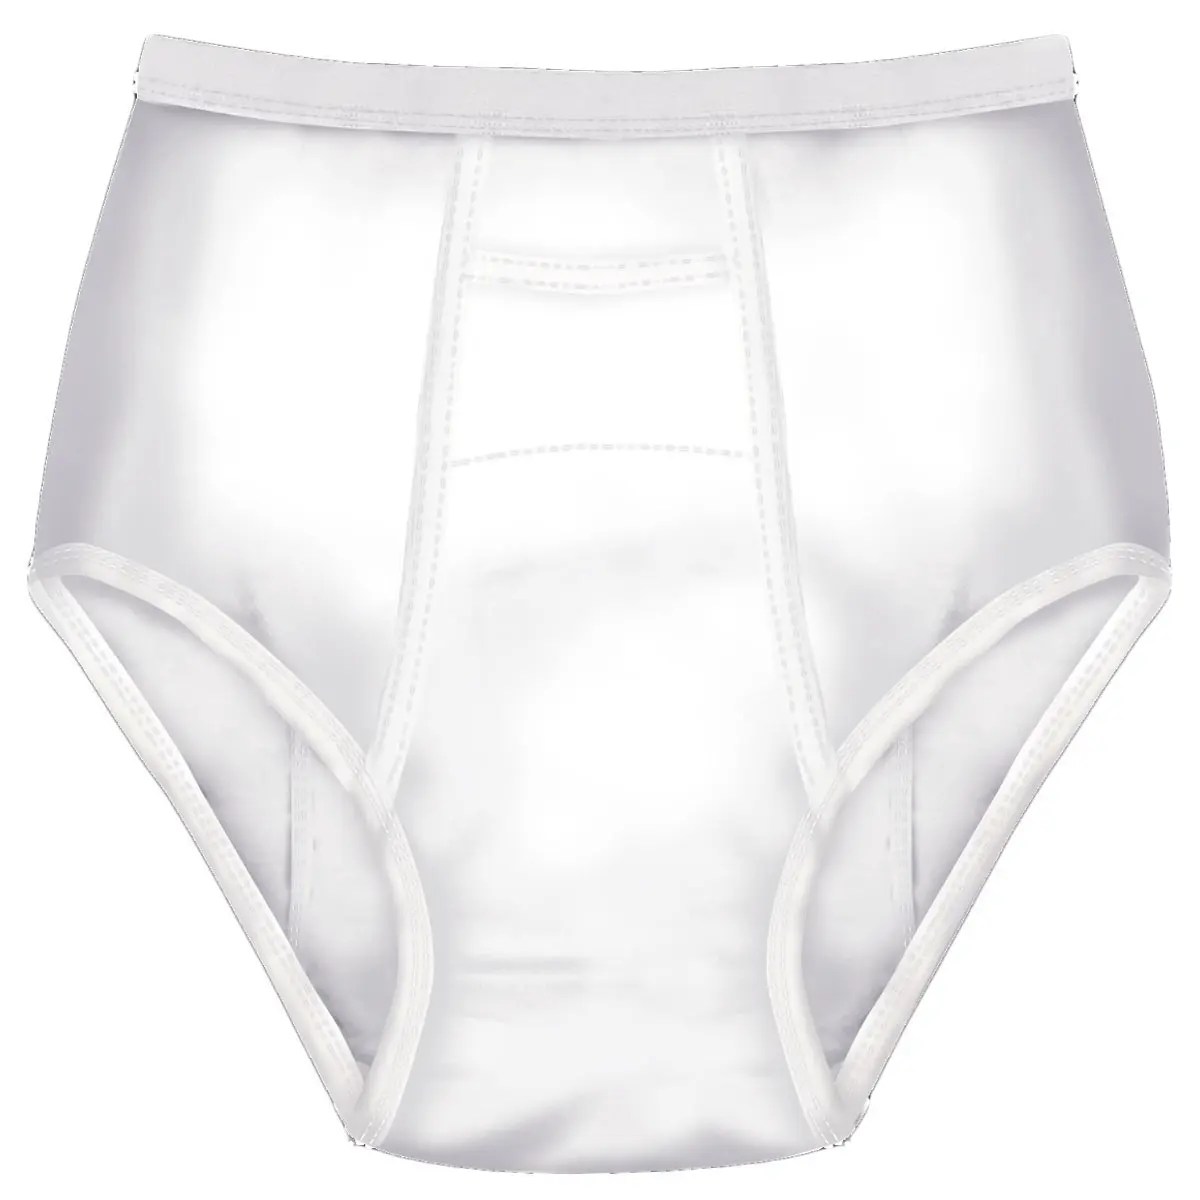 TotalDry Women's Reusable Underwear, Small